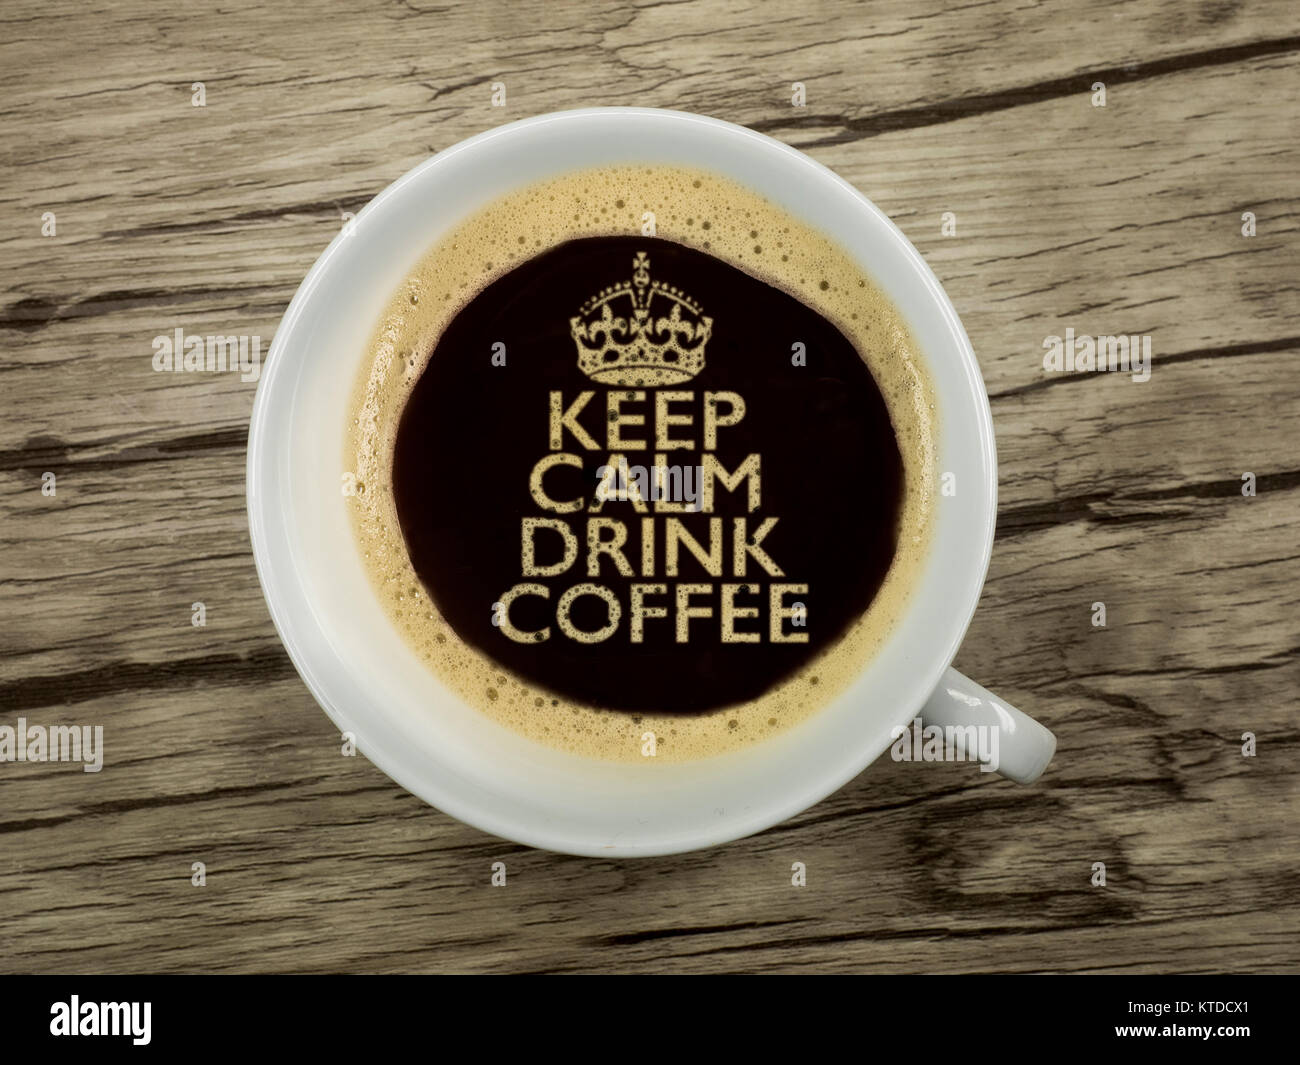 KEEP CALM AND DRINK COFFEE Stock Photo